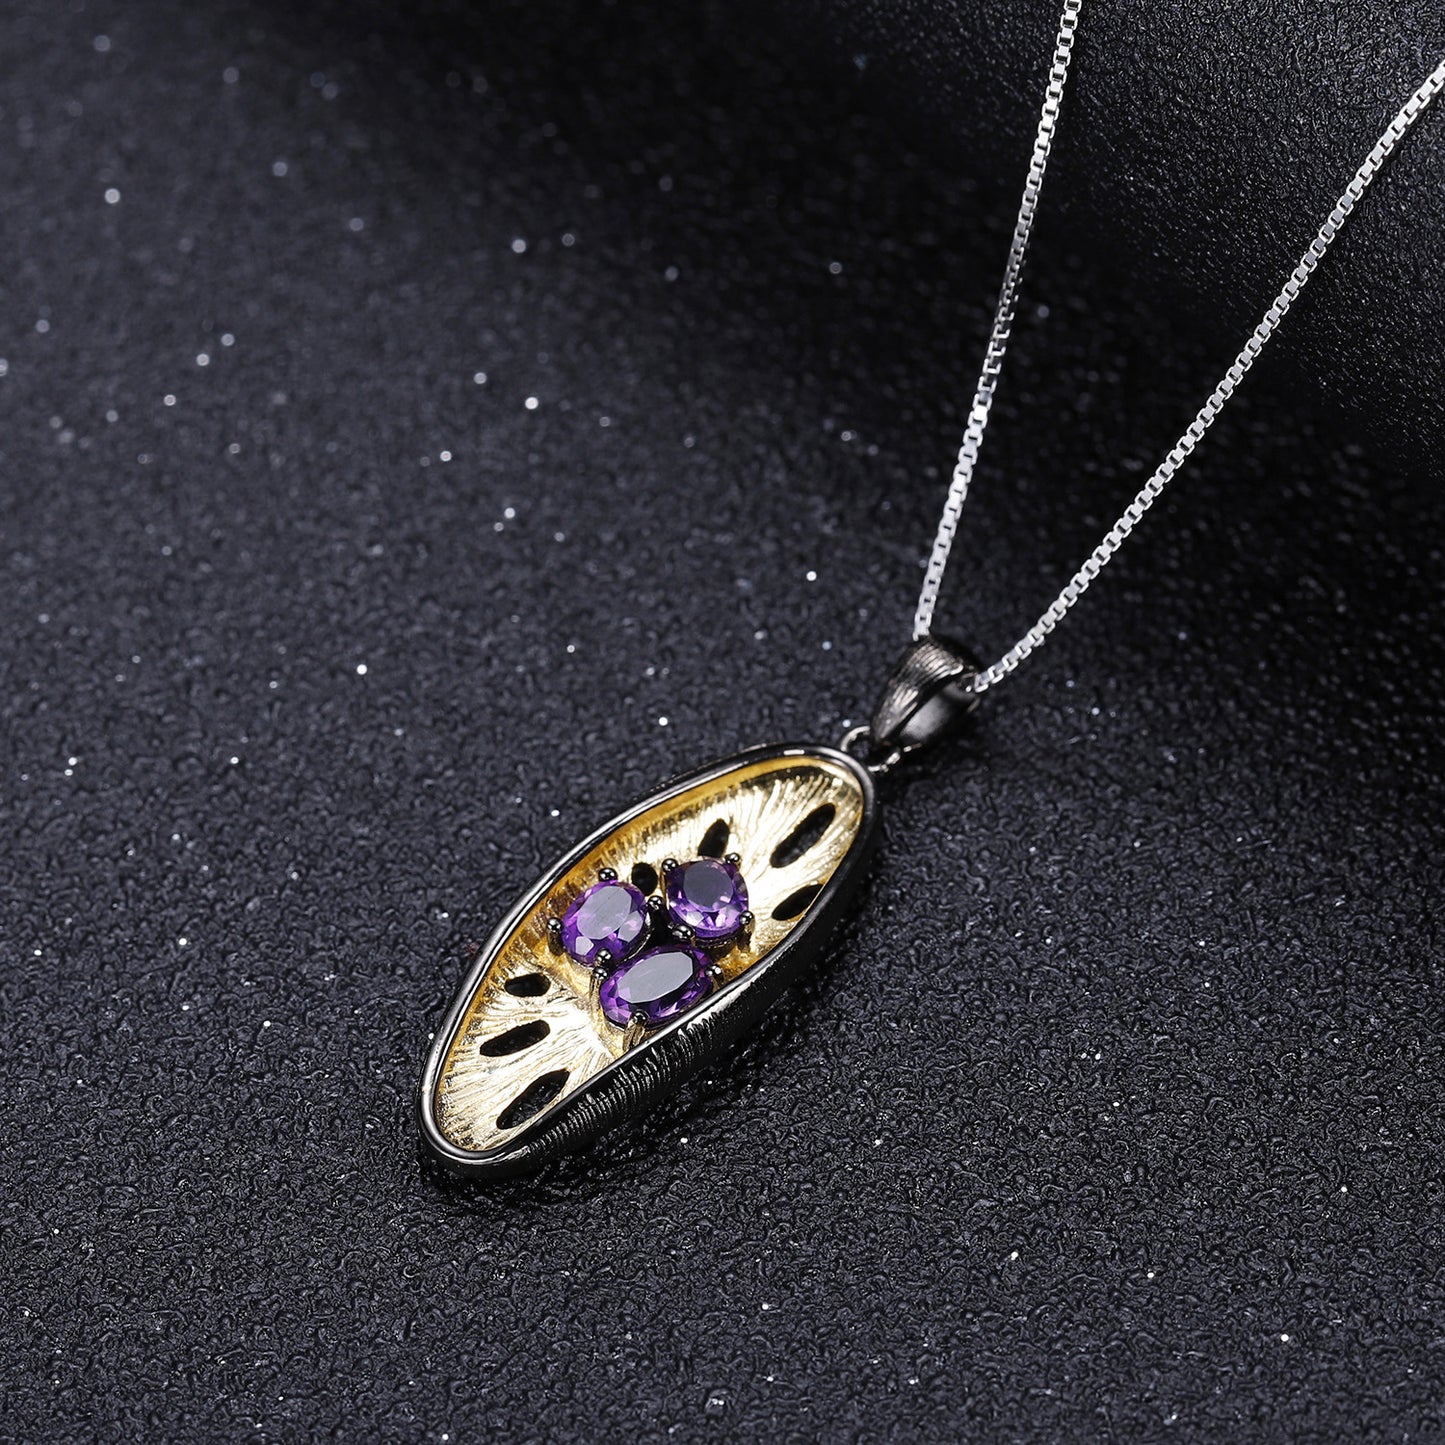 Italian Craft Design Vintage Luxury Sense Inlaid Natural Colourful Gemstone Pendant Silver Necklace for Women